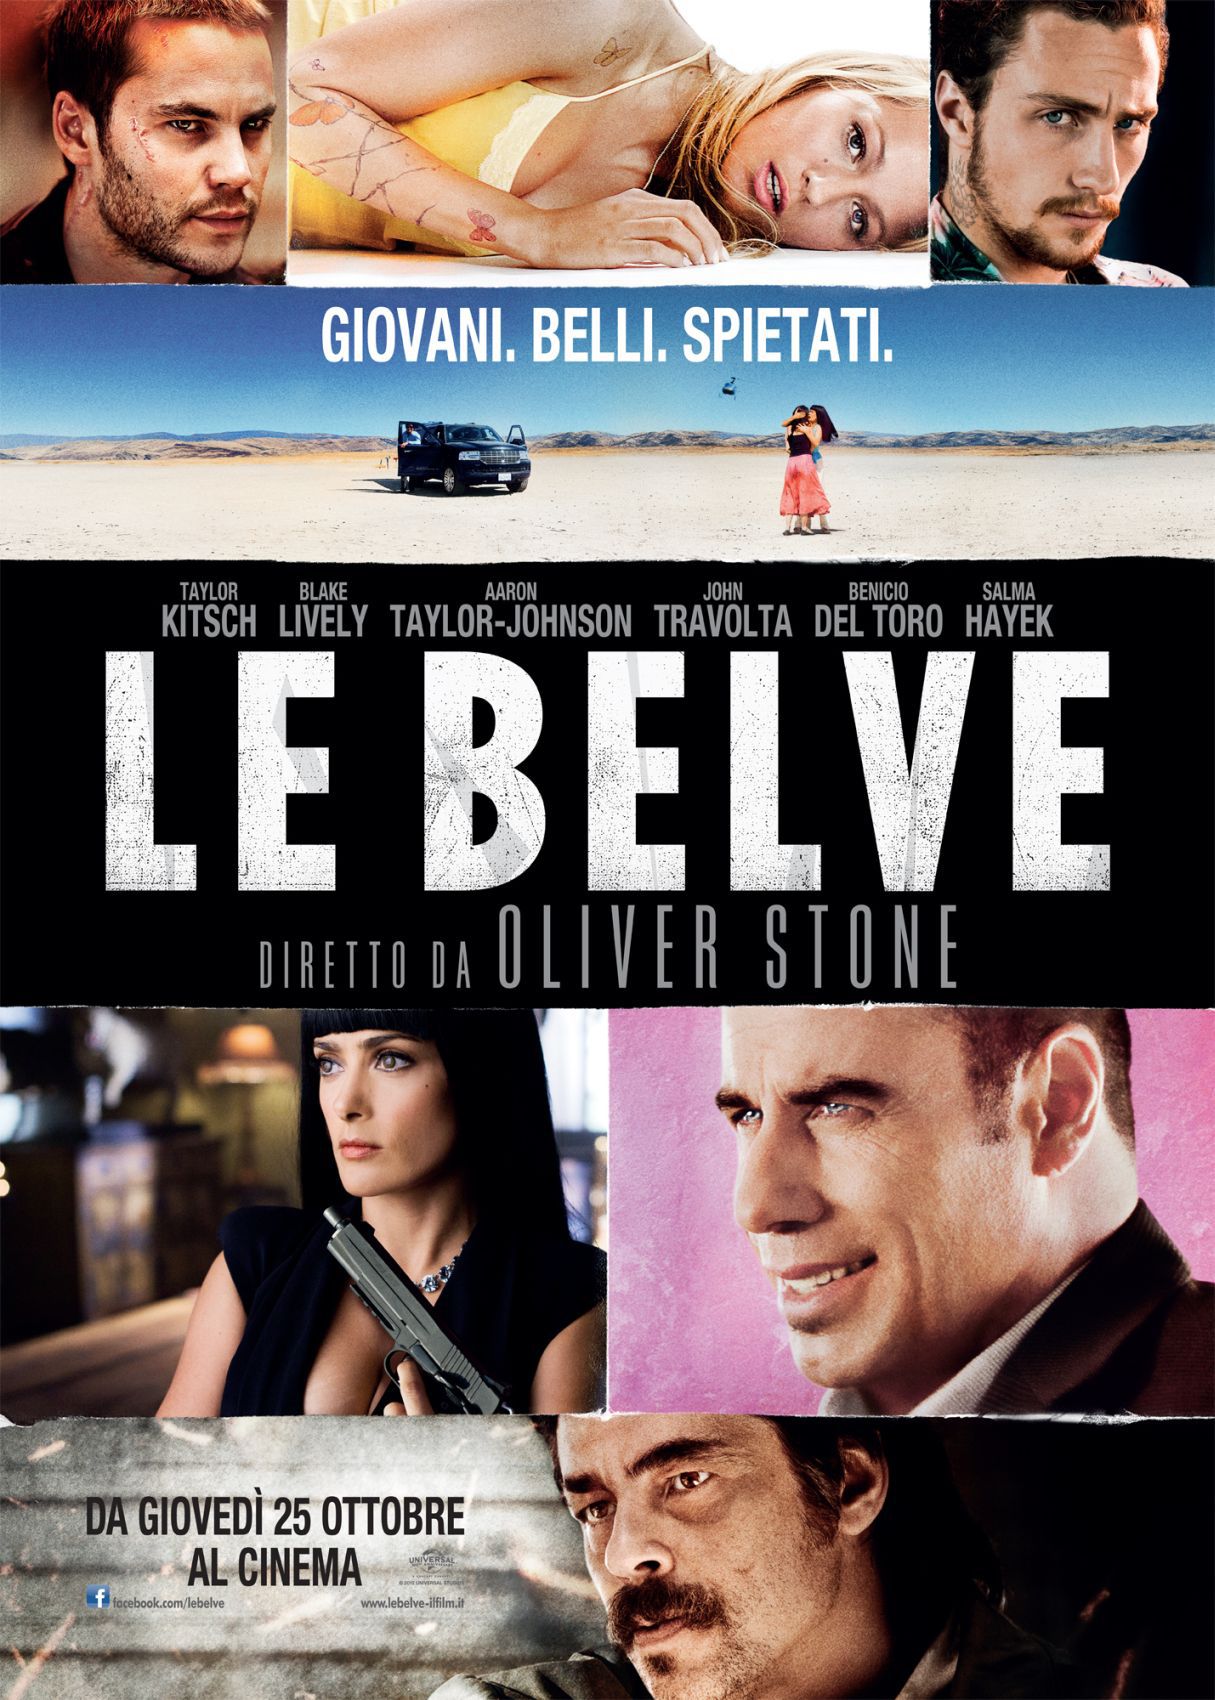 Le belve - Film 2012 - Everyeye Cinema